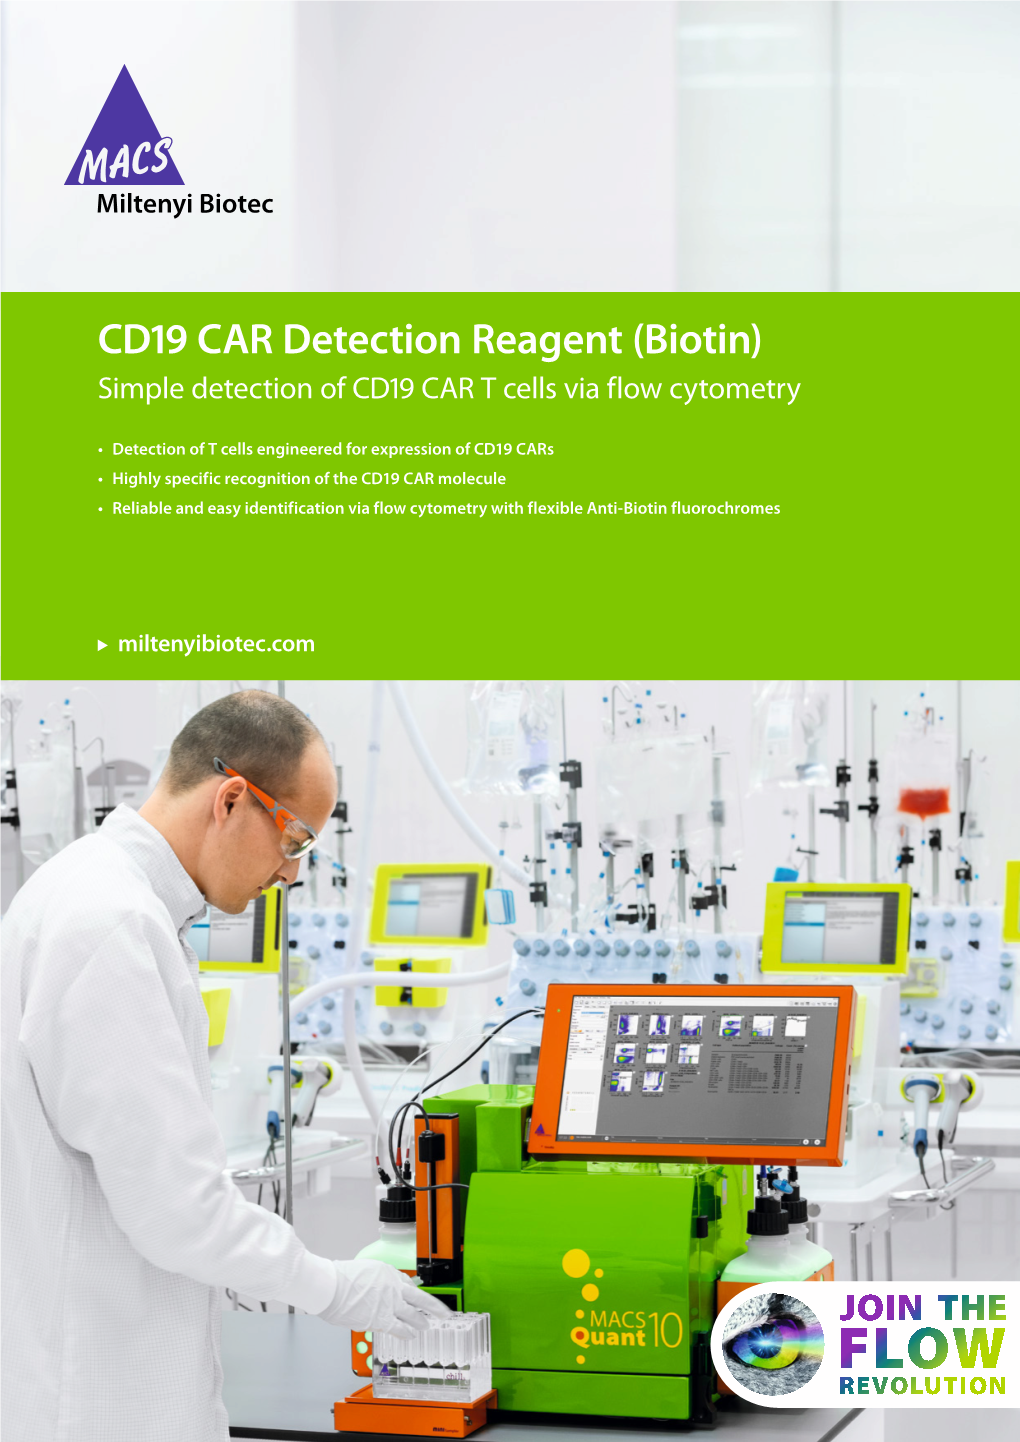 CD19 CAR Detection Reagent (Biotin) Simple Detection of CD19 CAR T Cells Via Flow Cytometry